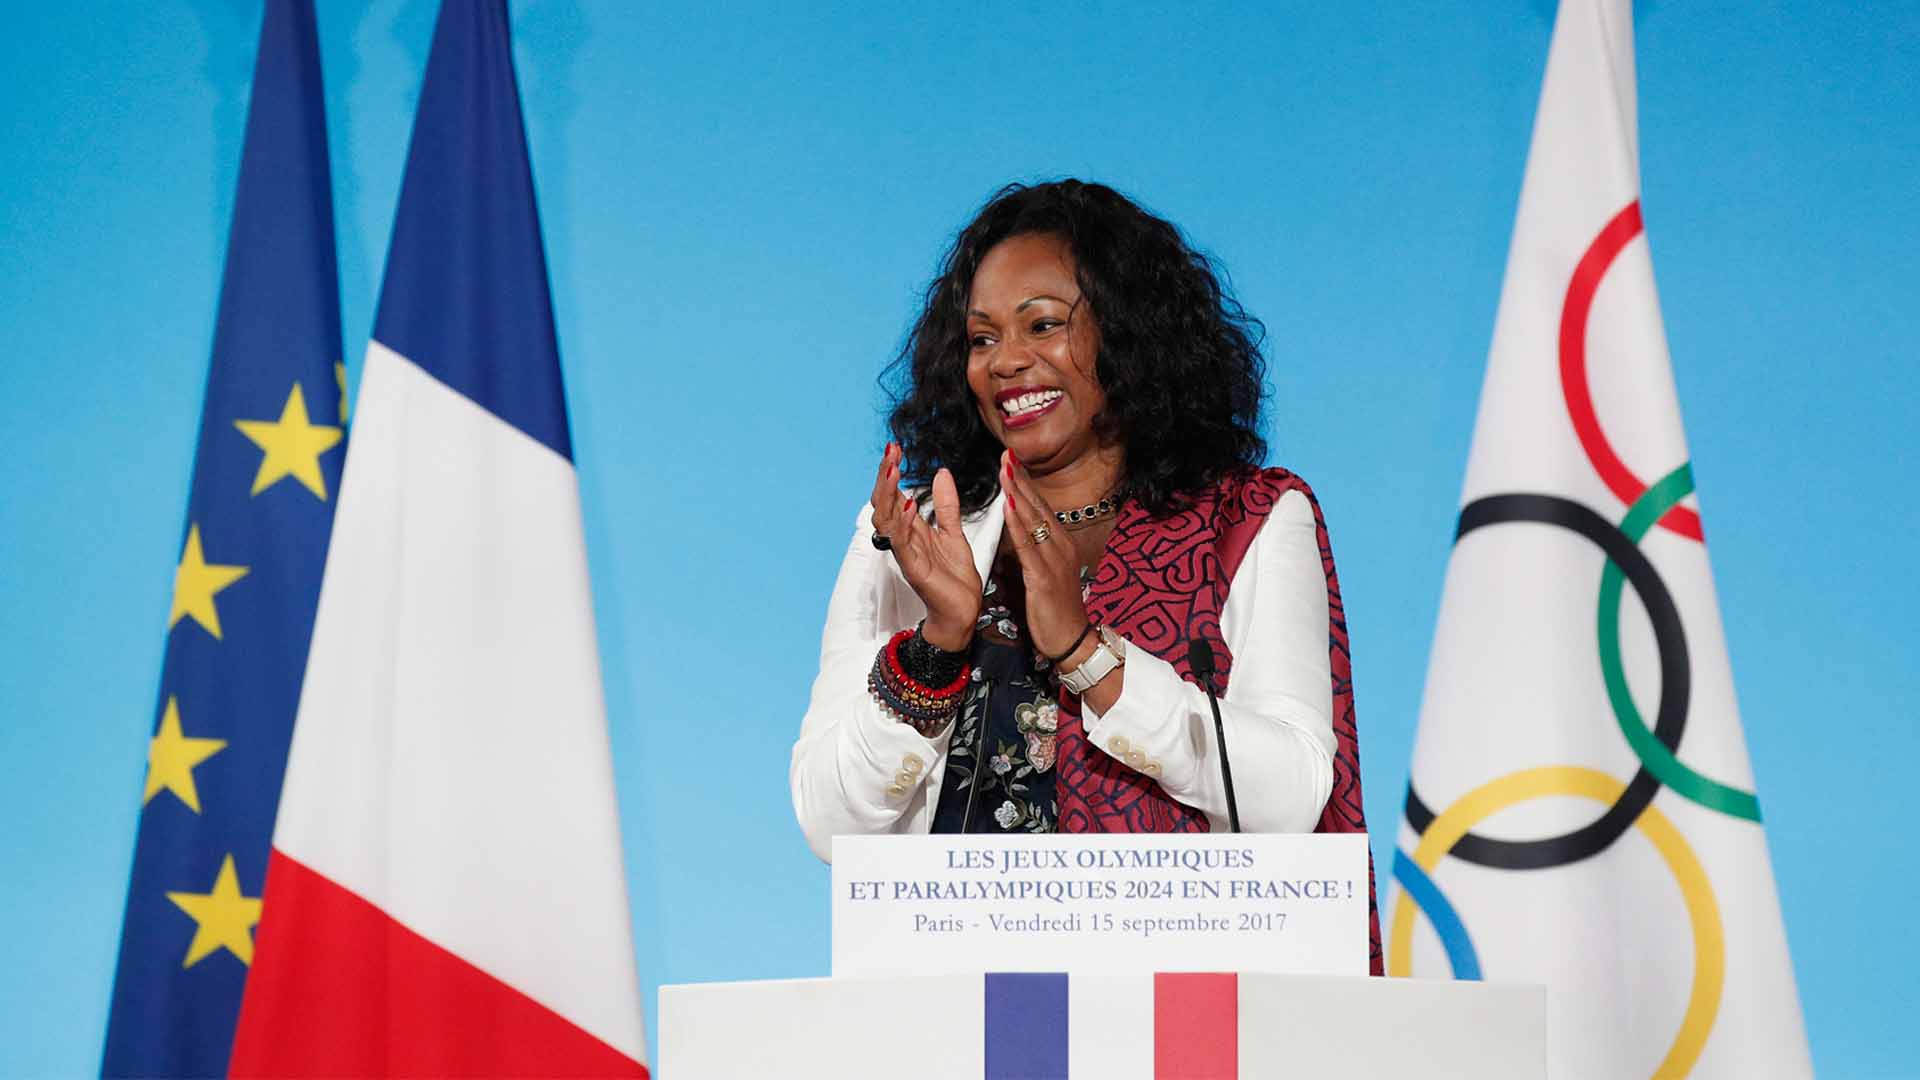 Dimite por sorpresa la ministra francesa de Deporte, Laura Flessel